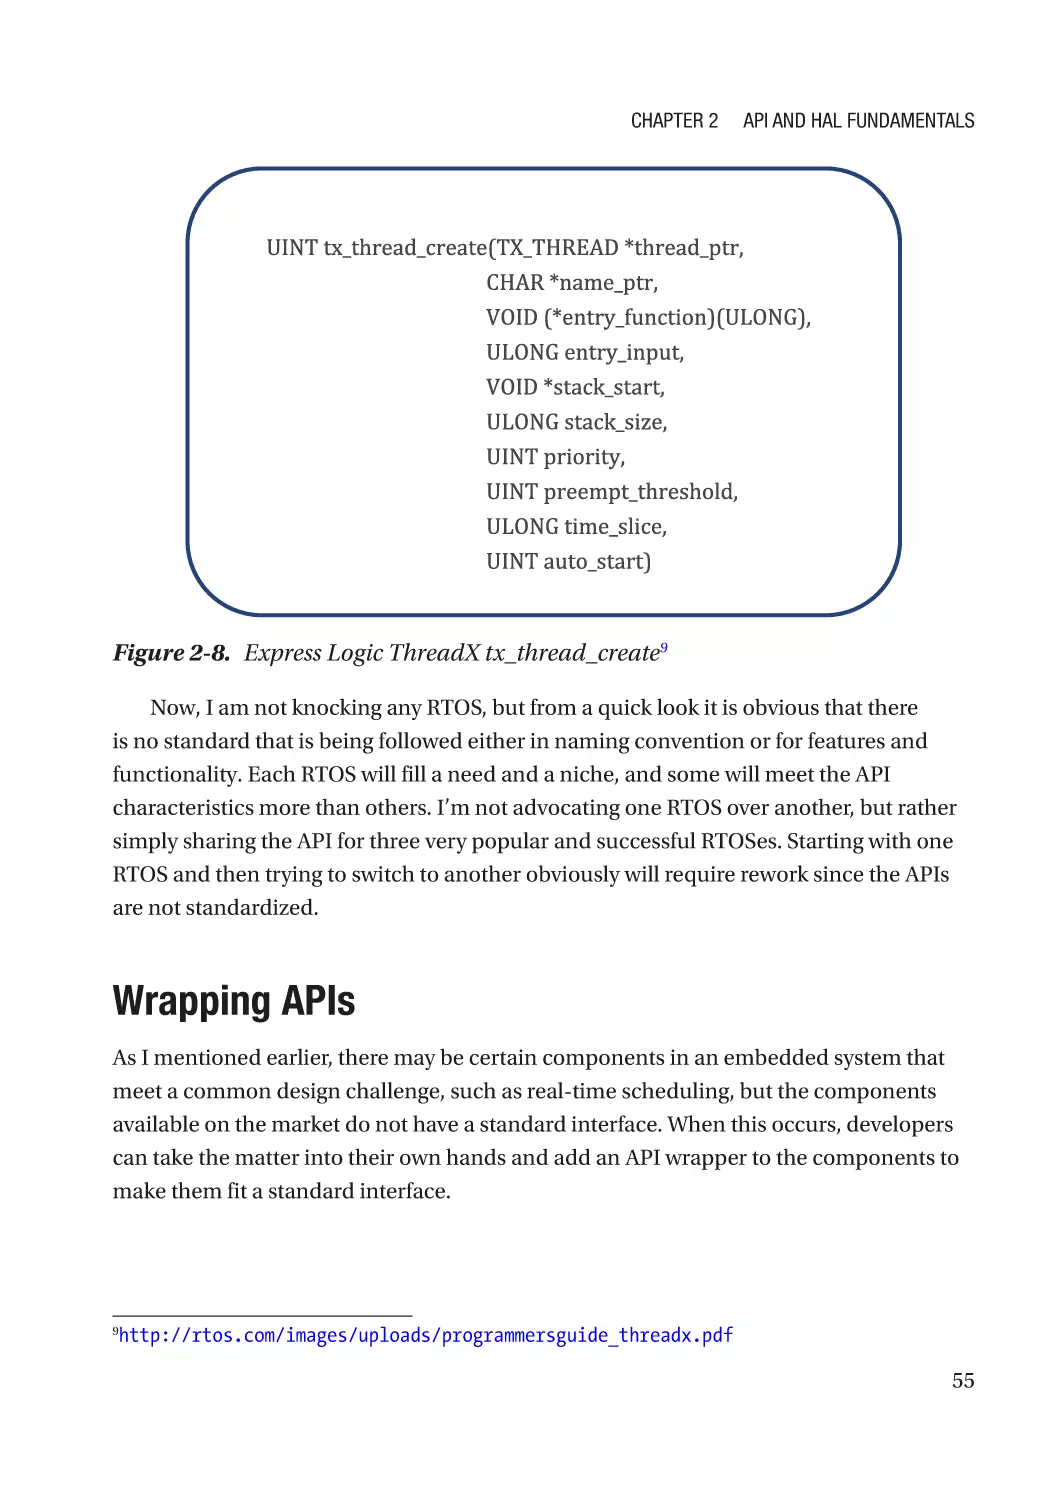 Wrapping APIs